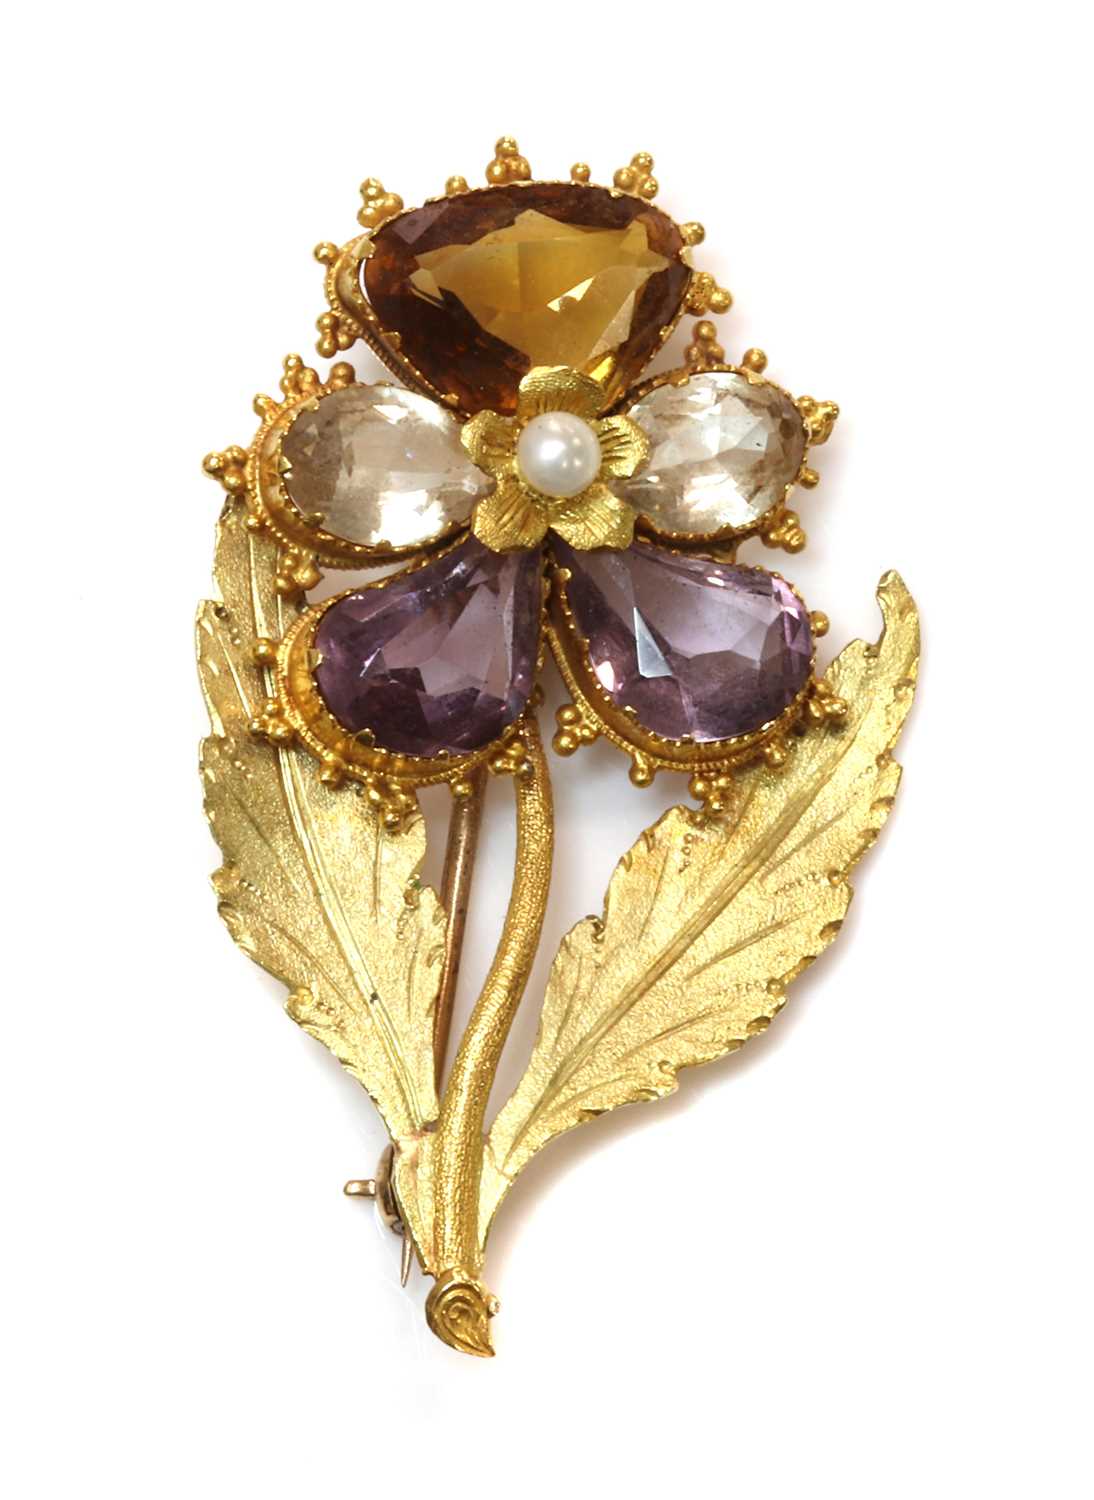 Lot 39 - A Regency seed pearl, citrine, quartz and amethyst pansy brooch, c.1820-1830